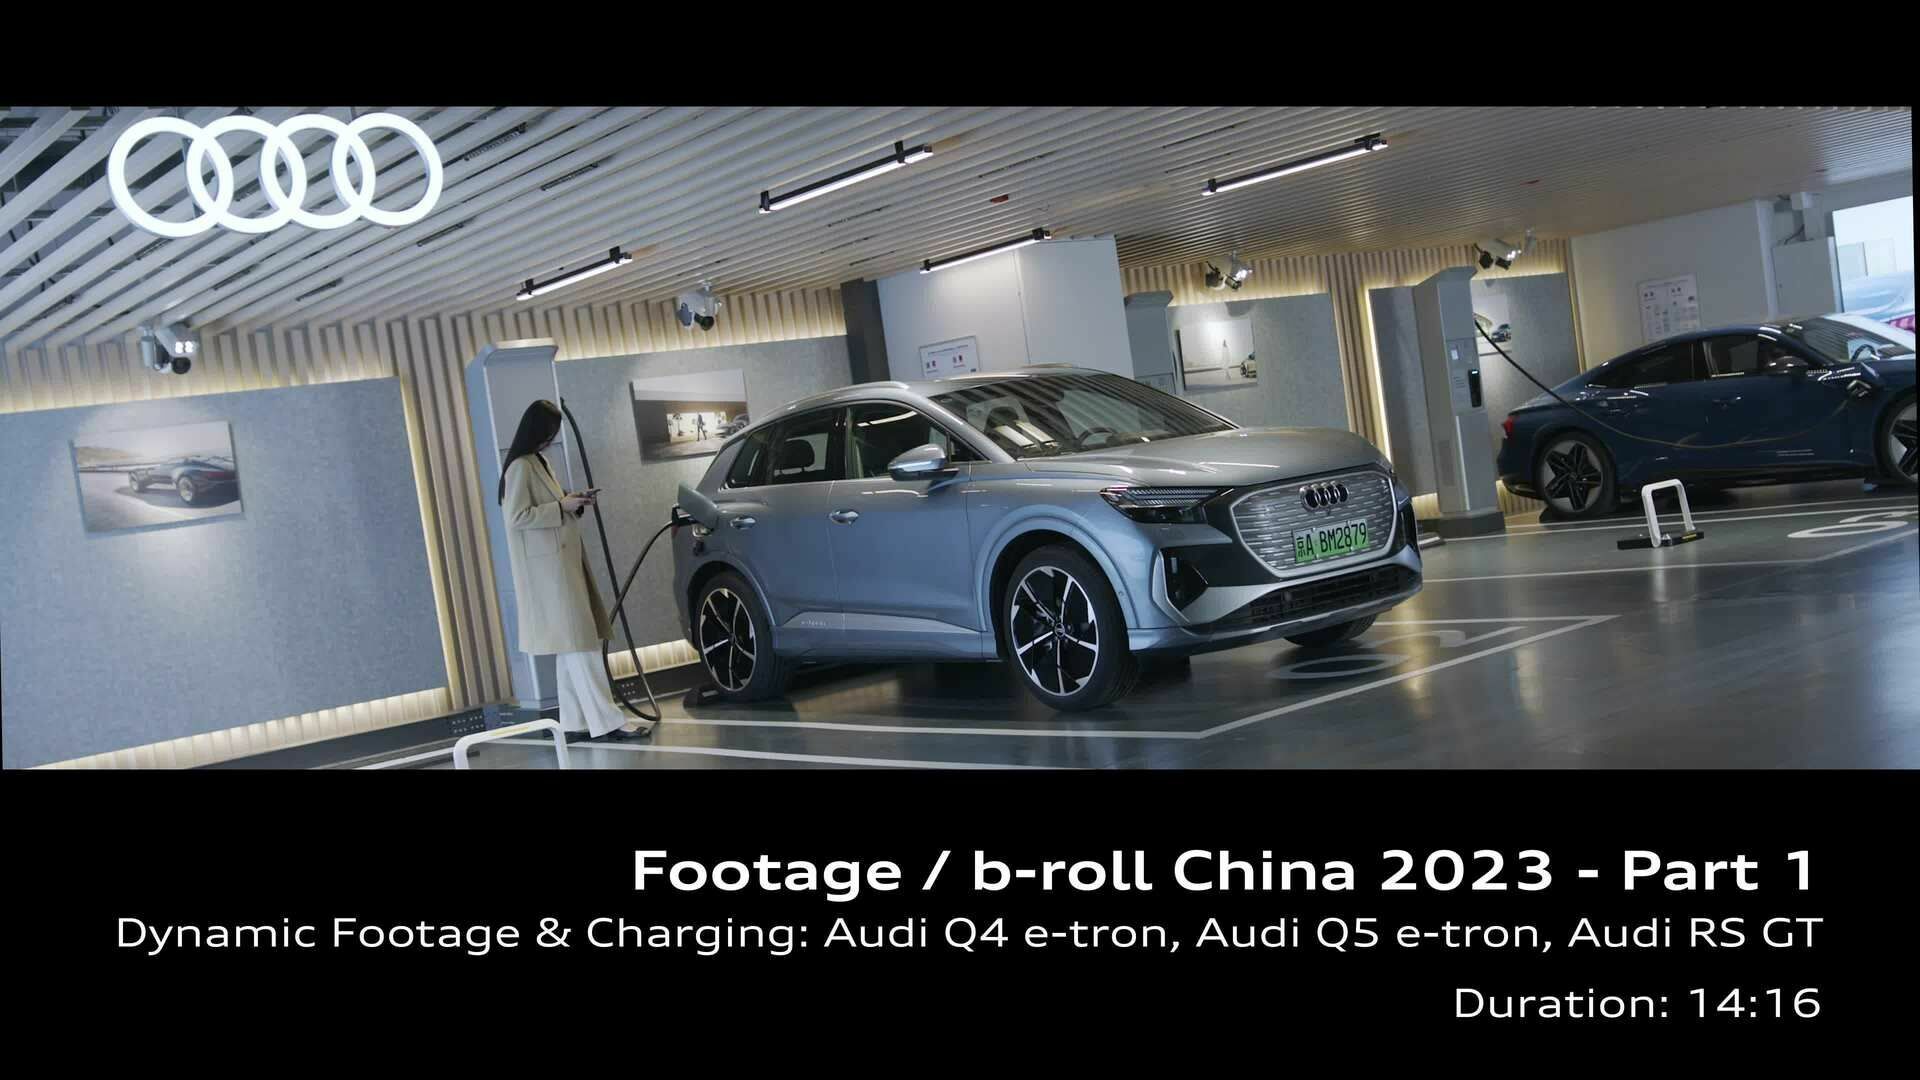 Footage: Auto China – Fahraufnahmen & Audi Ladestationen